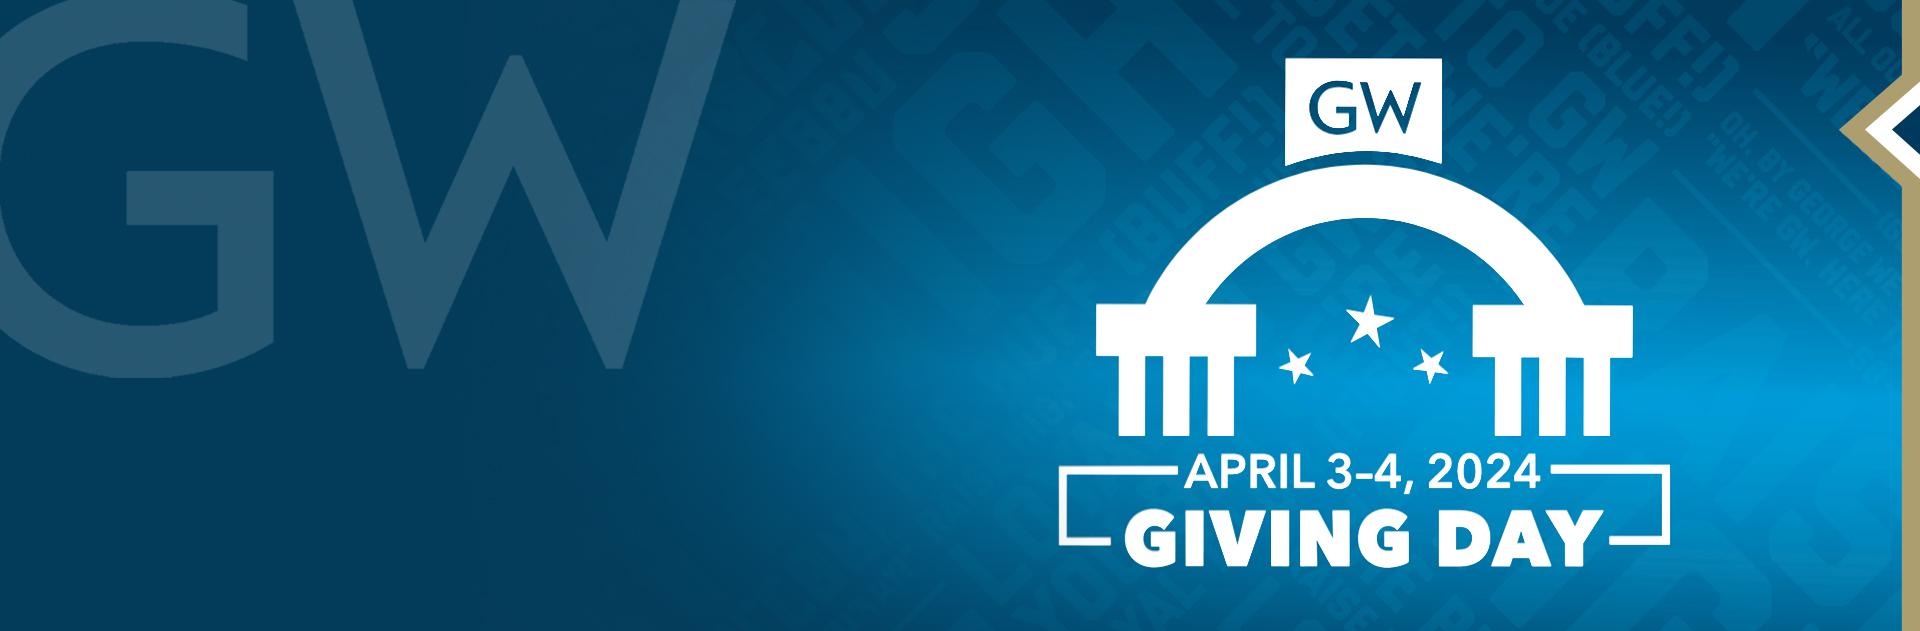 GW Giving Day | April 3-4, 2024